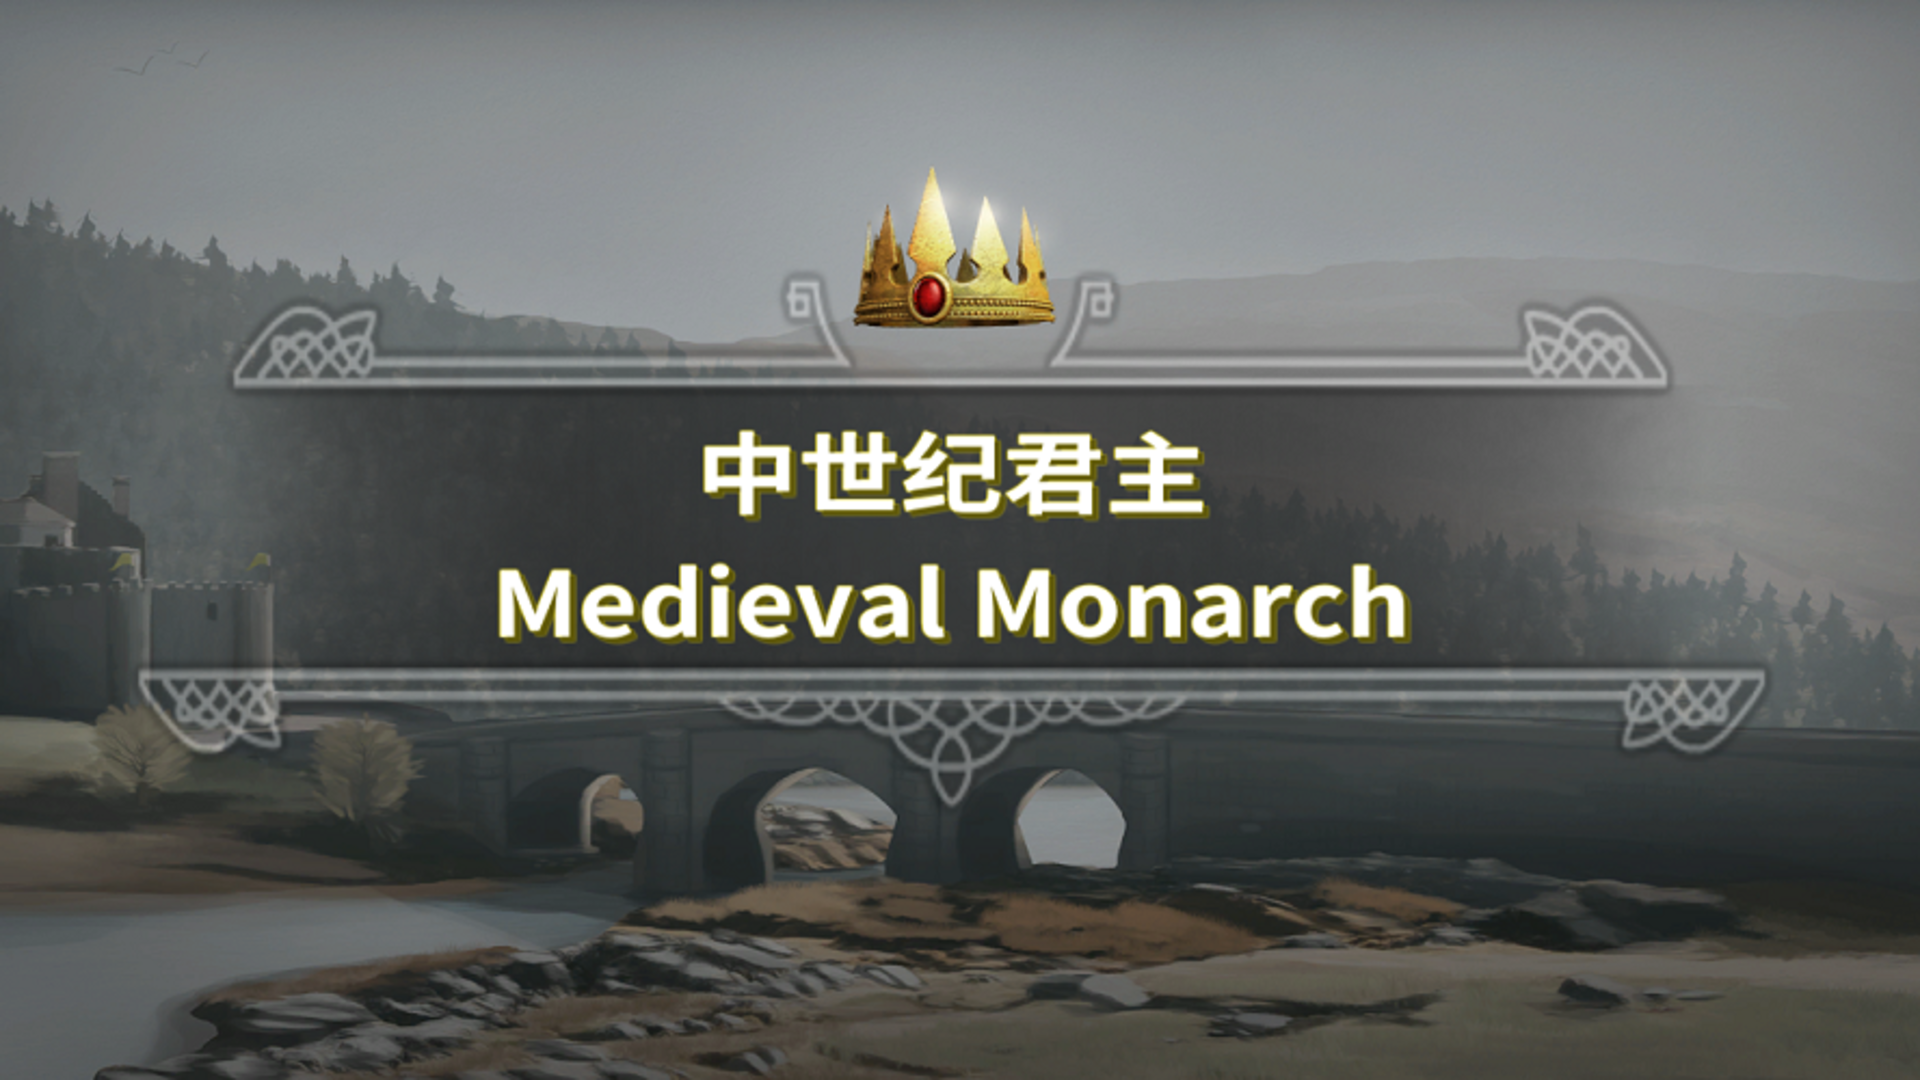 Banner of monarca medievale 